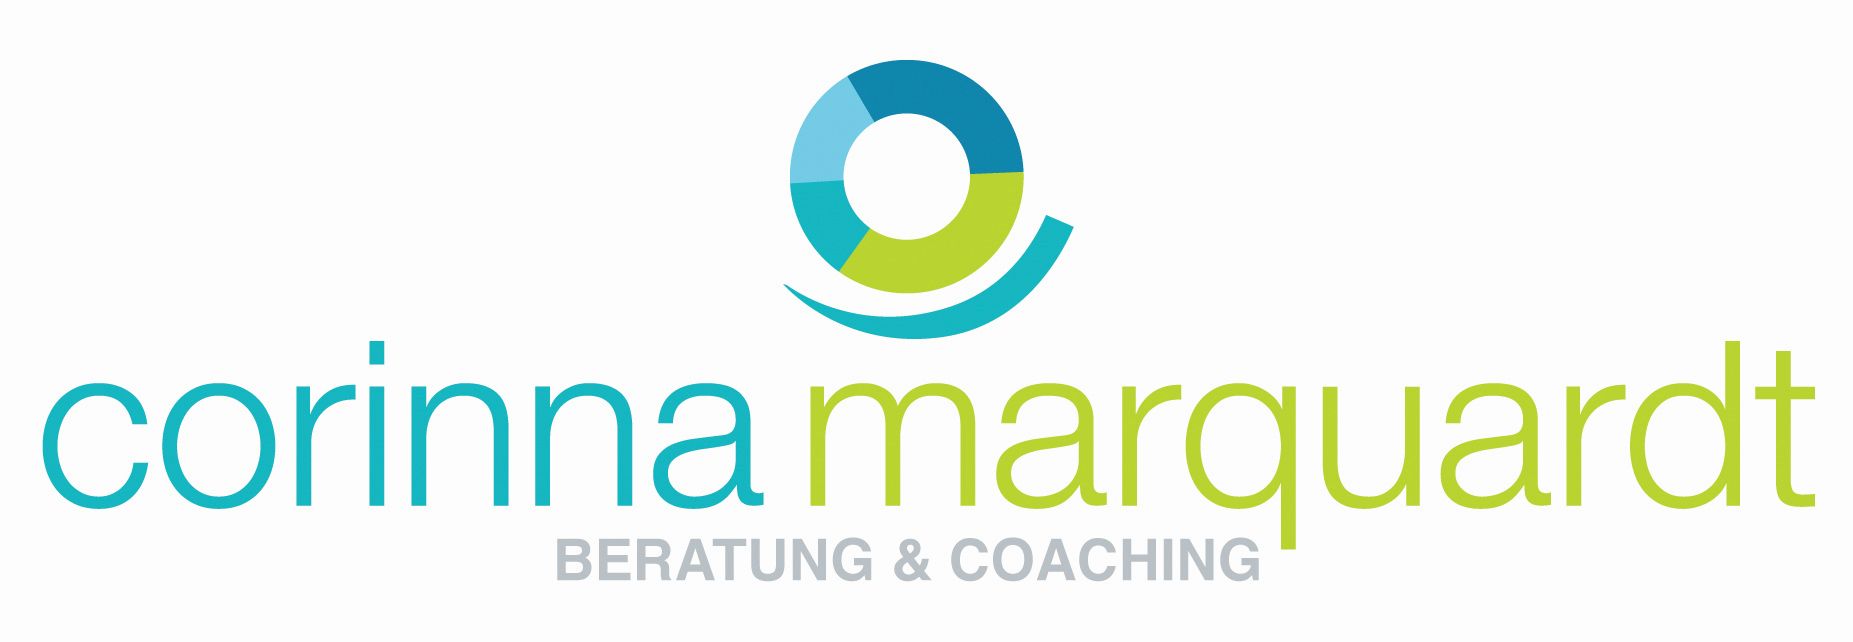 Beratung & Coaching Dr. Corinna Marquardt